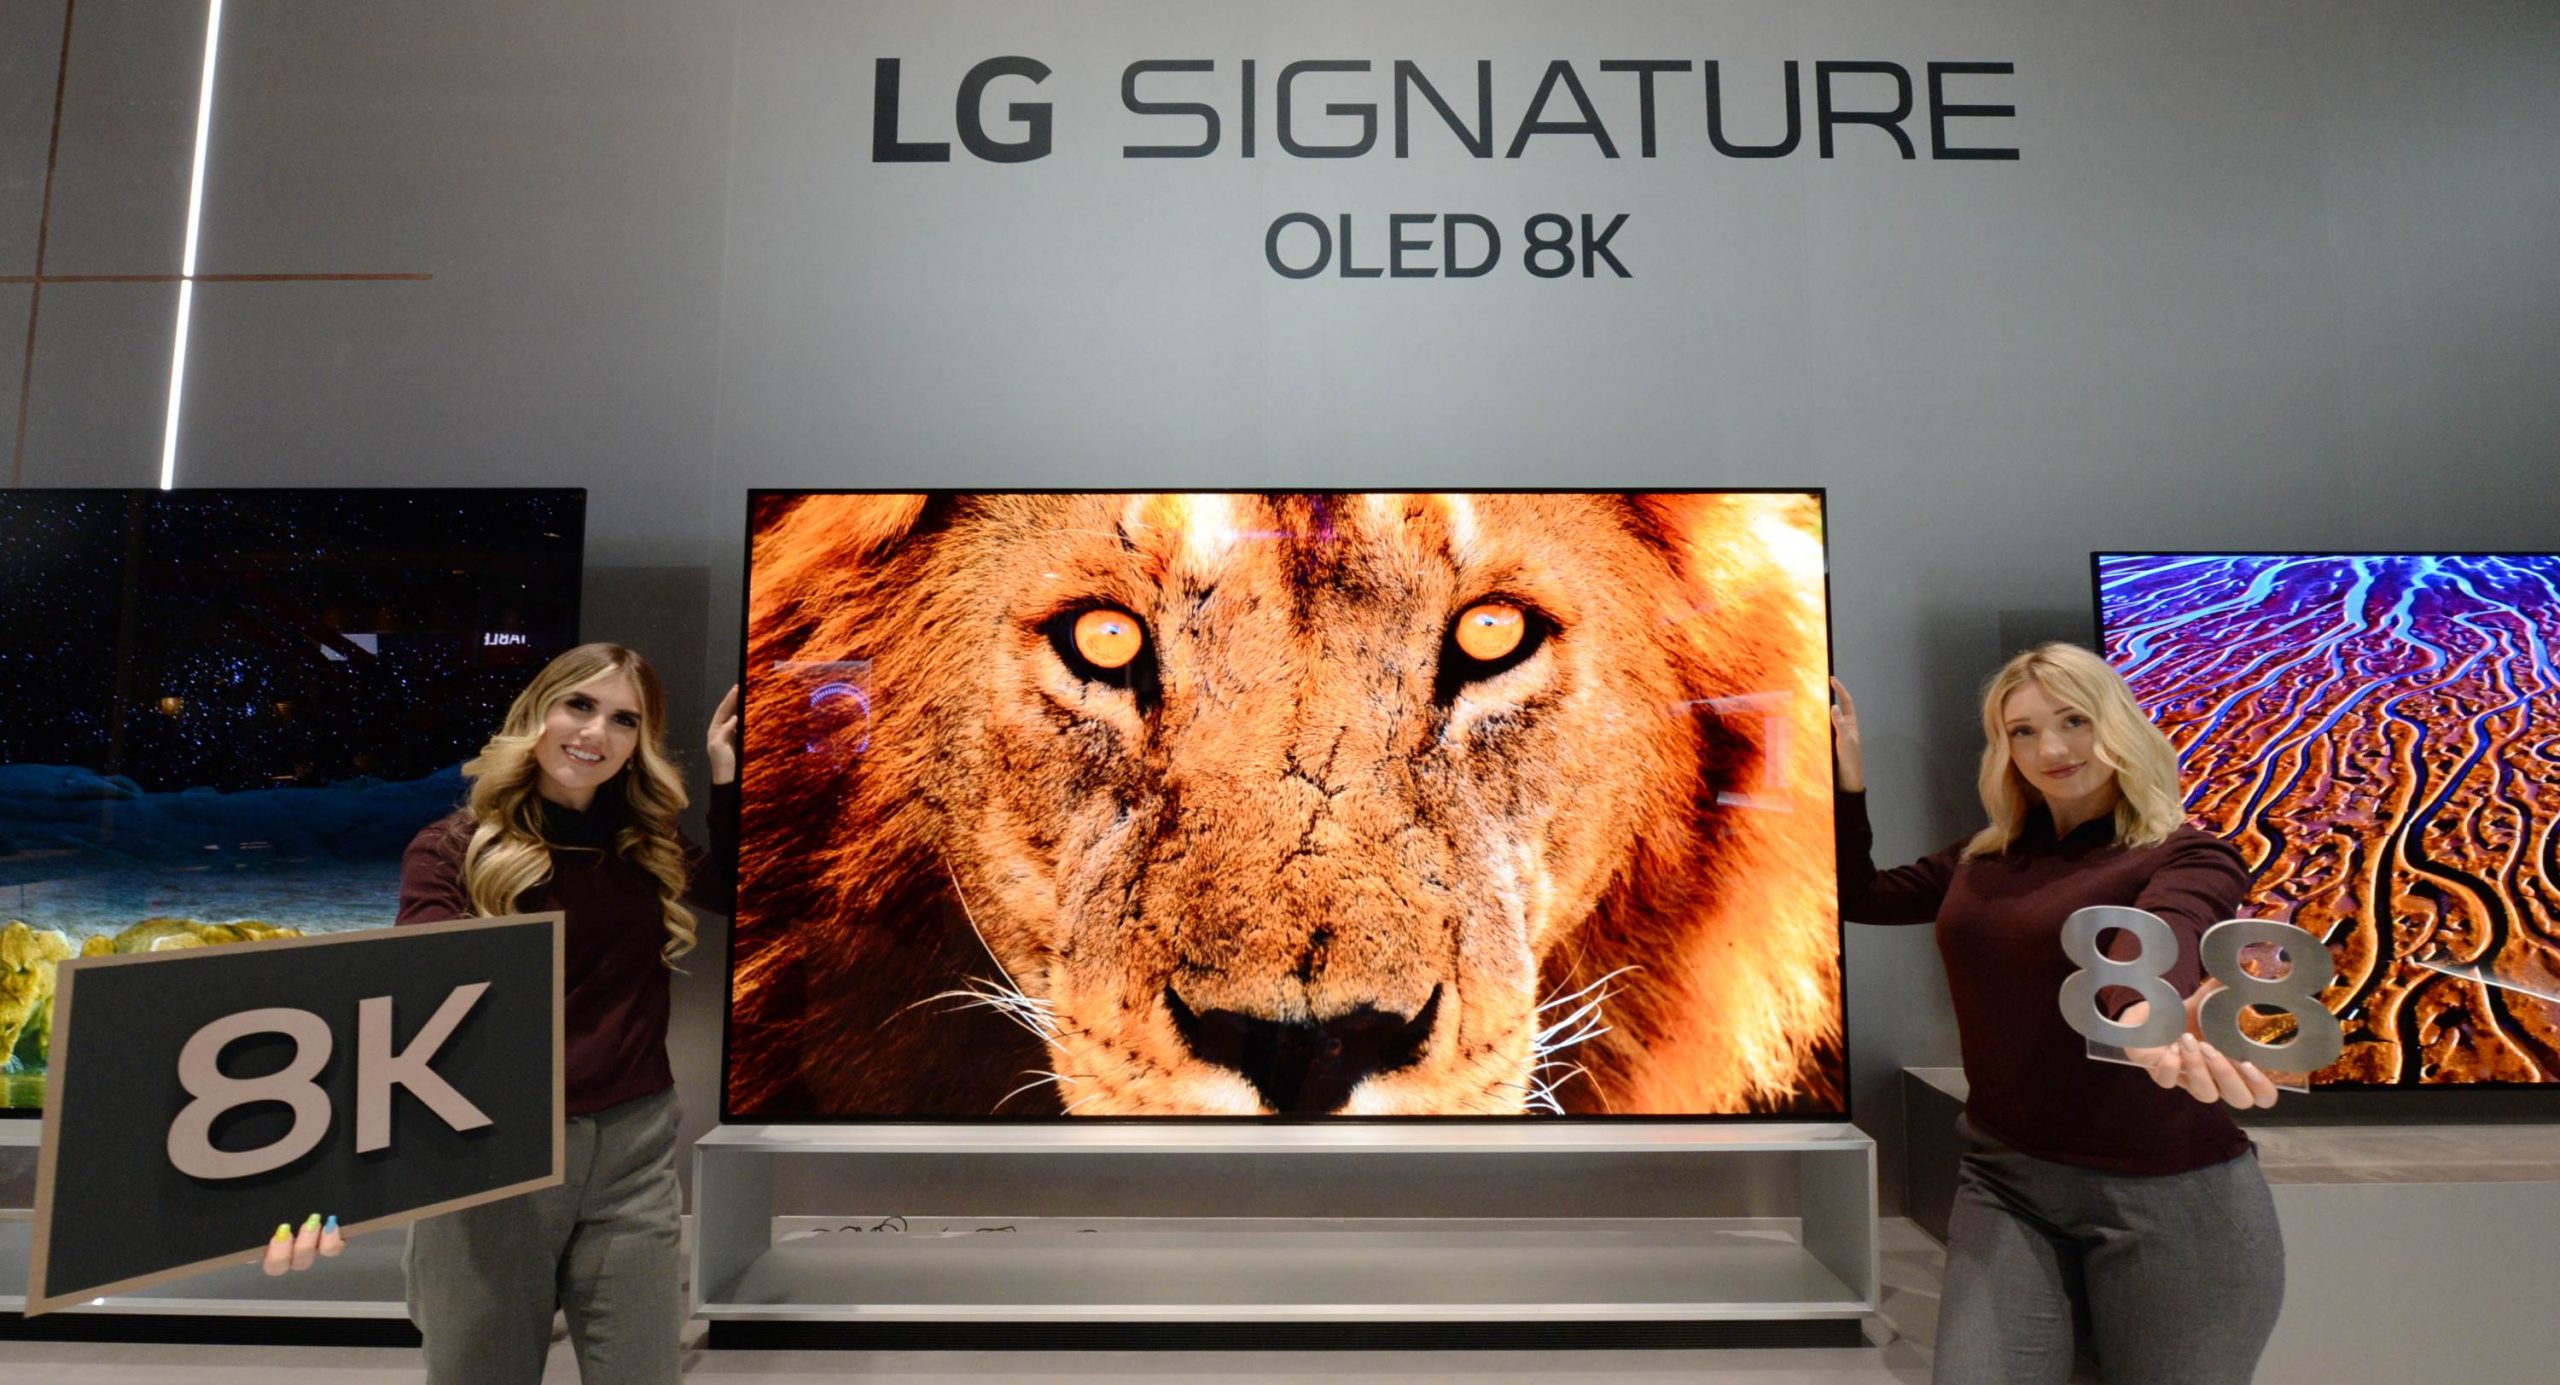 LG전자가 현지시간 7일부터 美 라스베이거스에서 열리는 CES 2020에서 올레드 기술 리더십을 기반으로 TV 신제품을 대거 선보인다. LG전자 모델들이 인공지능 프로세서 ‘알파9 3세대(α9 Gen3)’를 탑재한 88형 'LG 시그니처 올레드 8K' 신제품을 소개하고 있다. LG전자 '리얼 8K' TV는 화질선명도 값이 수평 방향과 수직 방향 모두 90% 수준으로 차원이 다른 선명함를 자랑한다.